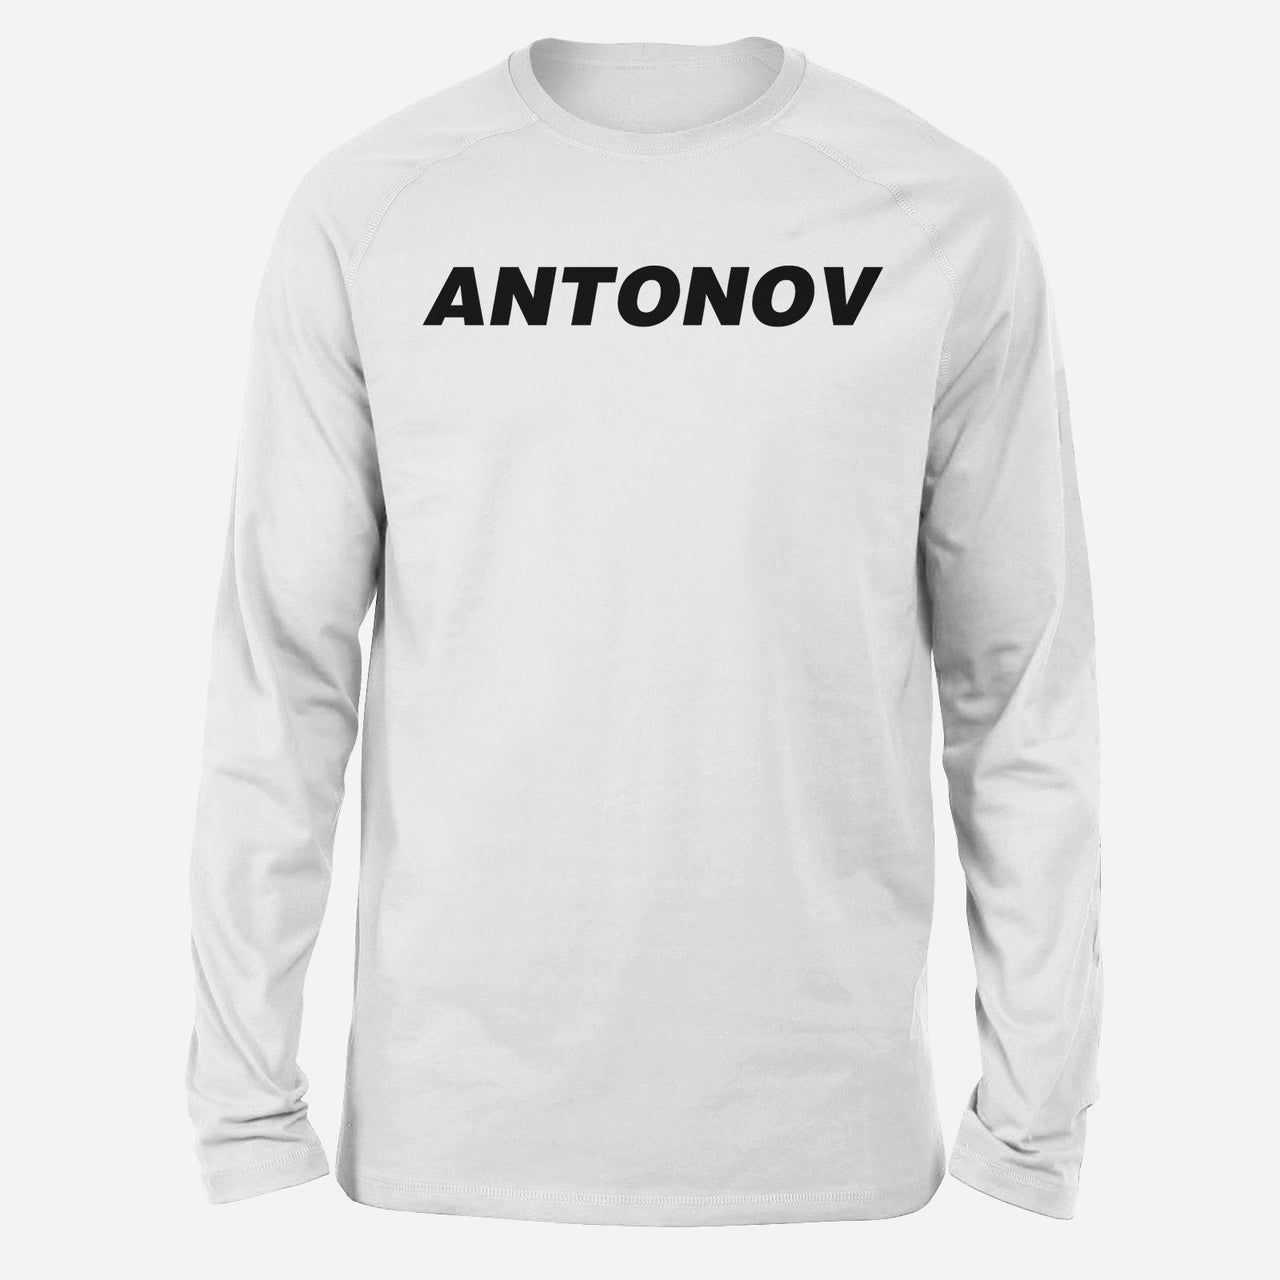 Antonov & Text Designed Long-Sleeve T-Shirts